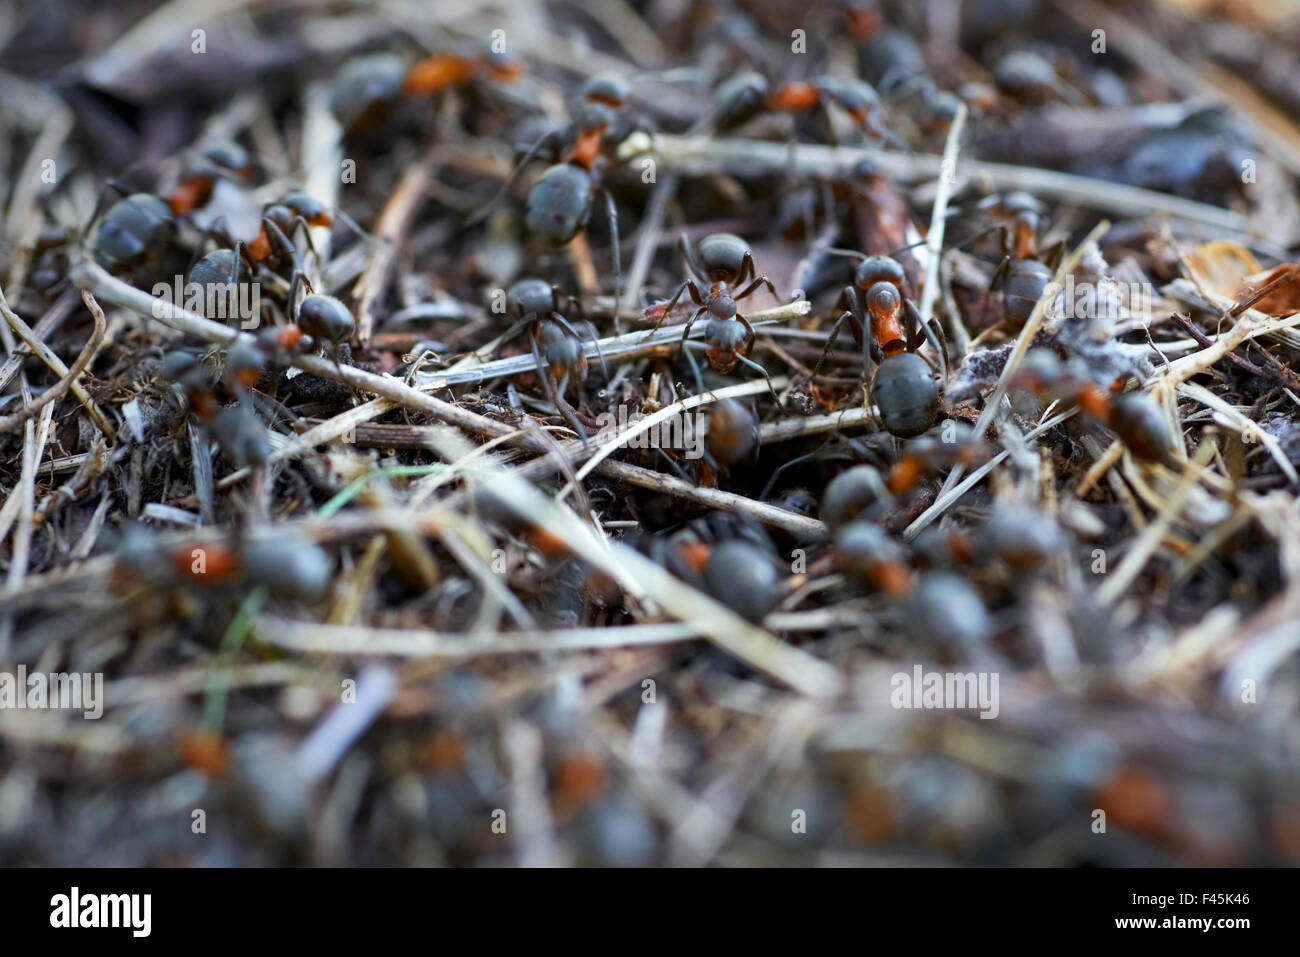 Ameisenhaufen im Wald Stockfoto